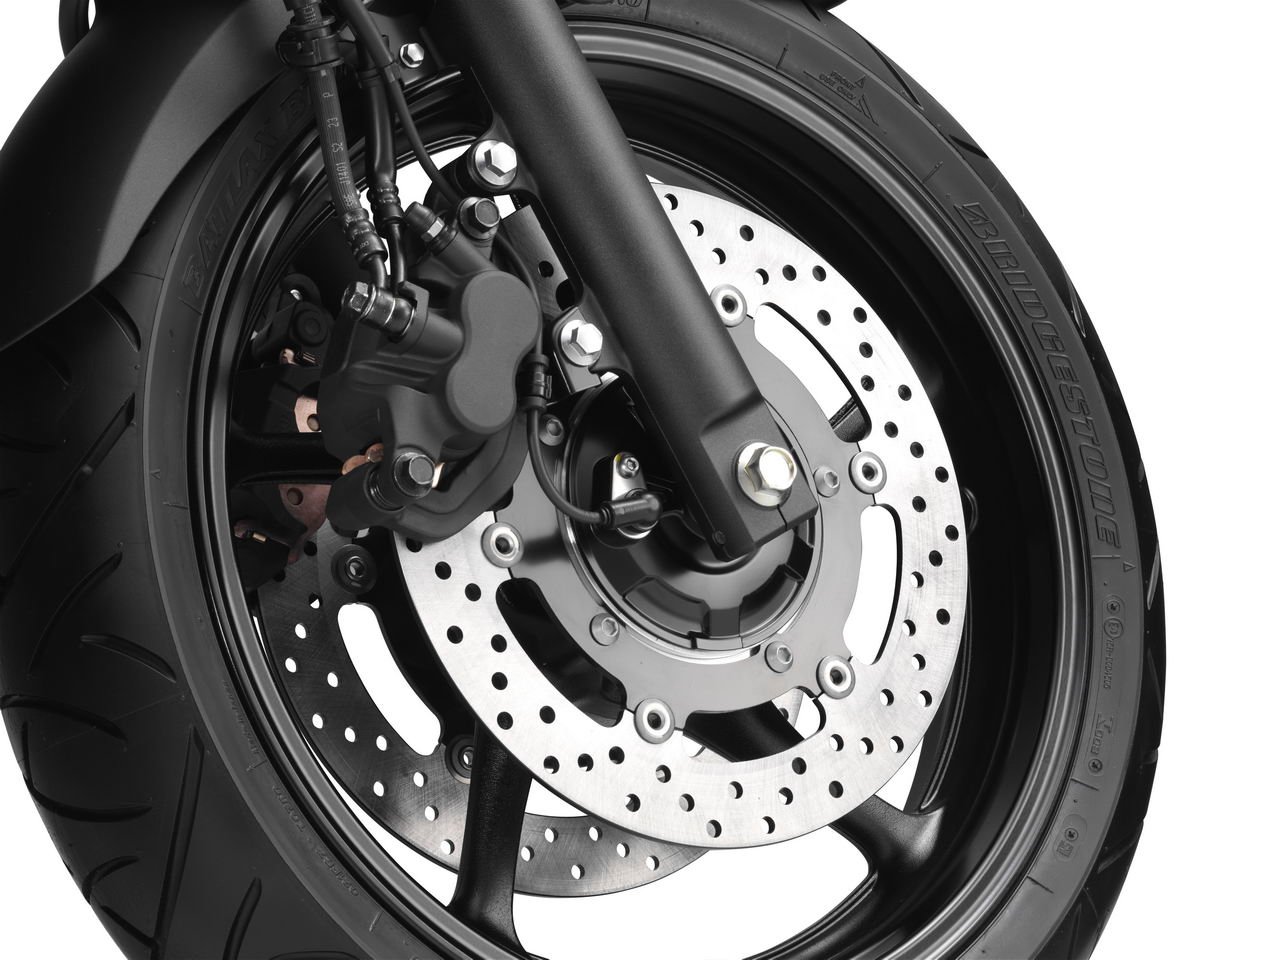 Listino Yamaha Fazer 8 ABS Sport-touring - image 15451_yamaha-xj6 on https://moto.motori.net